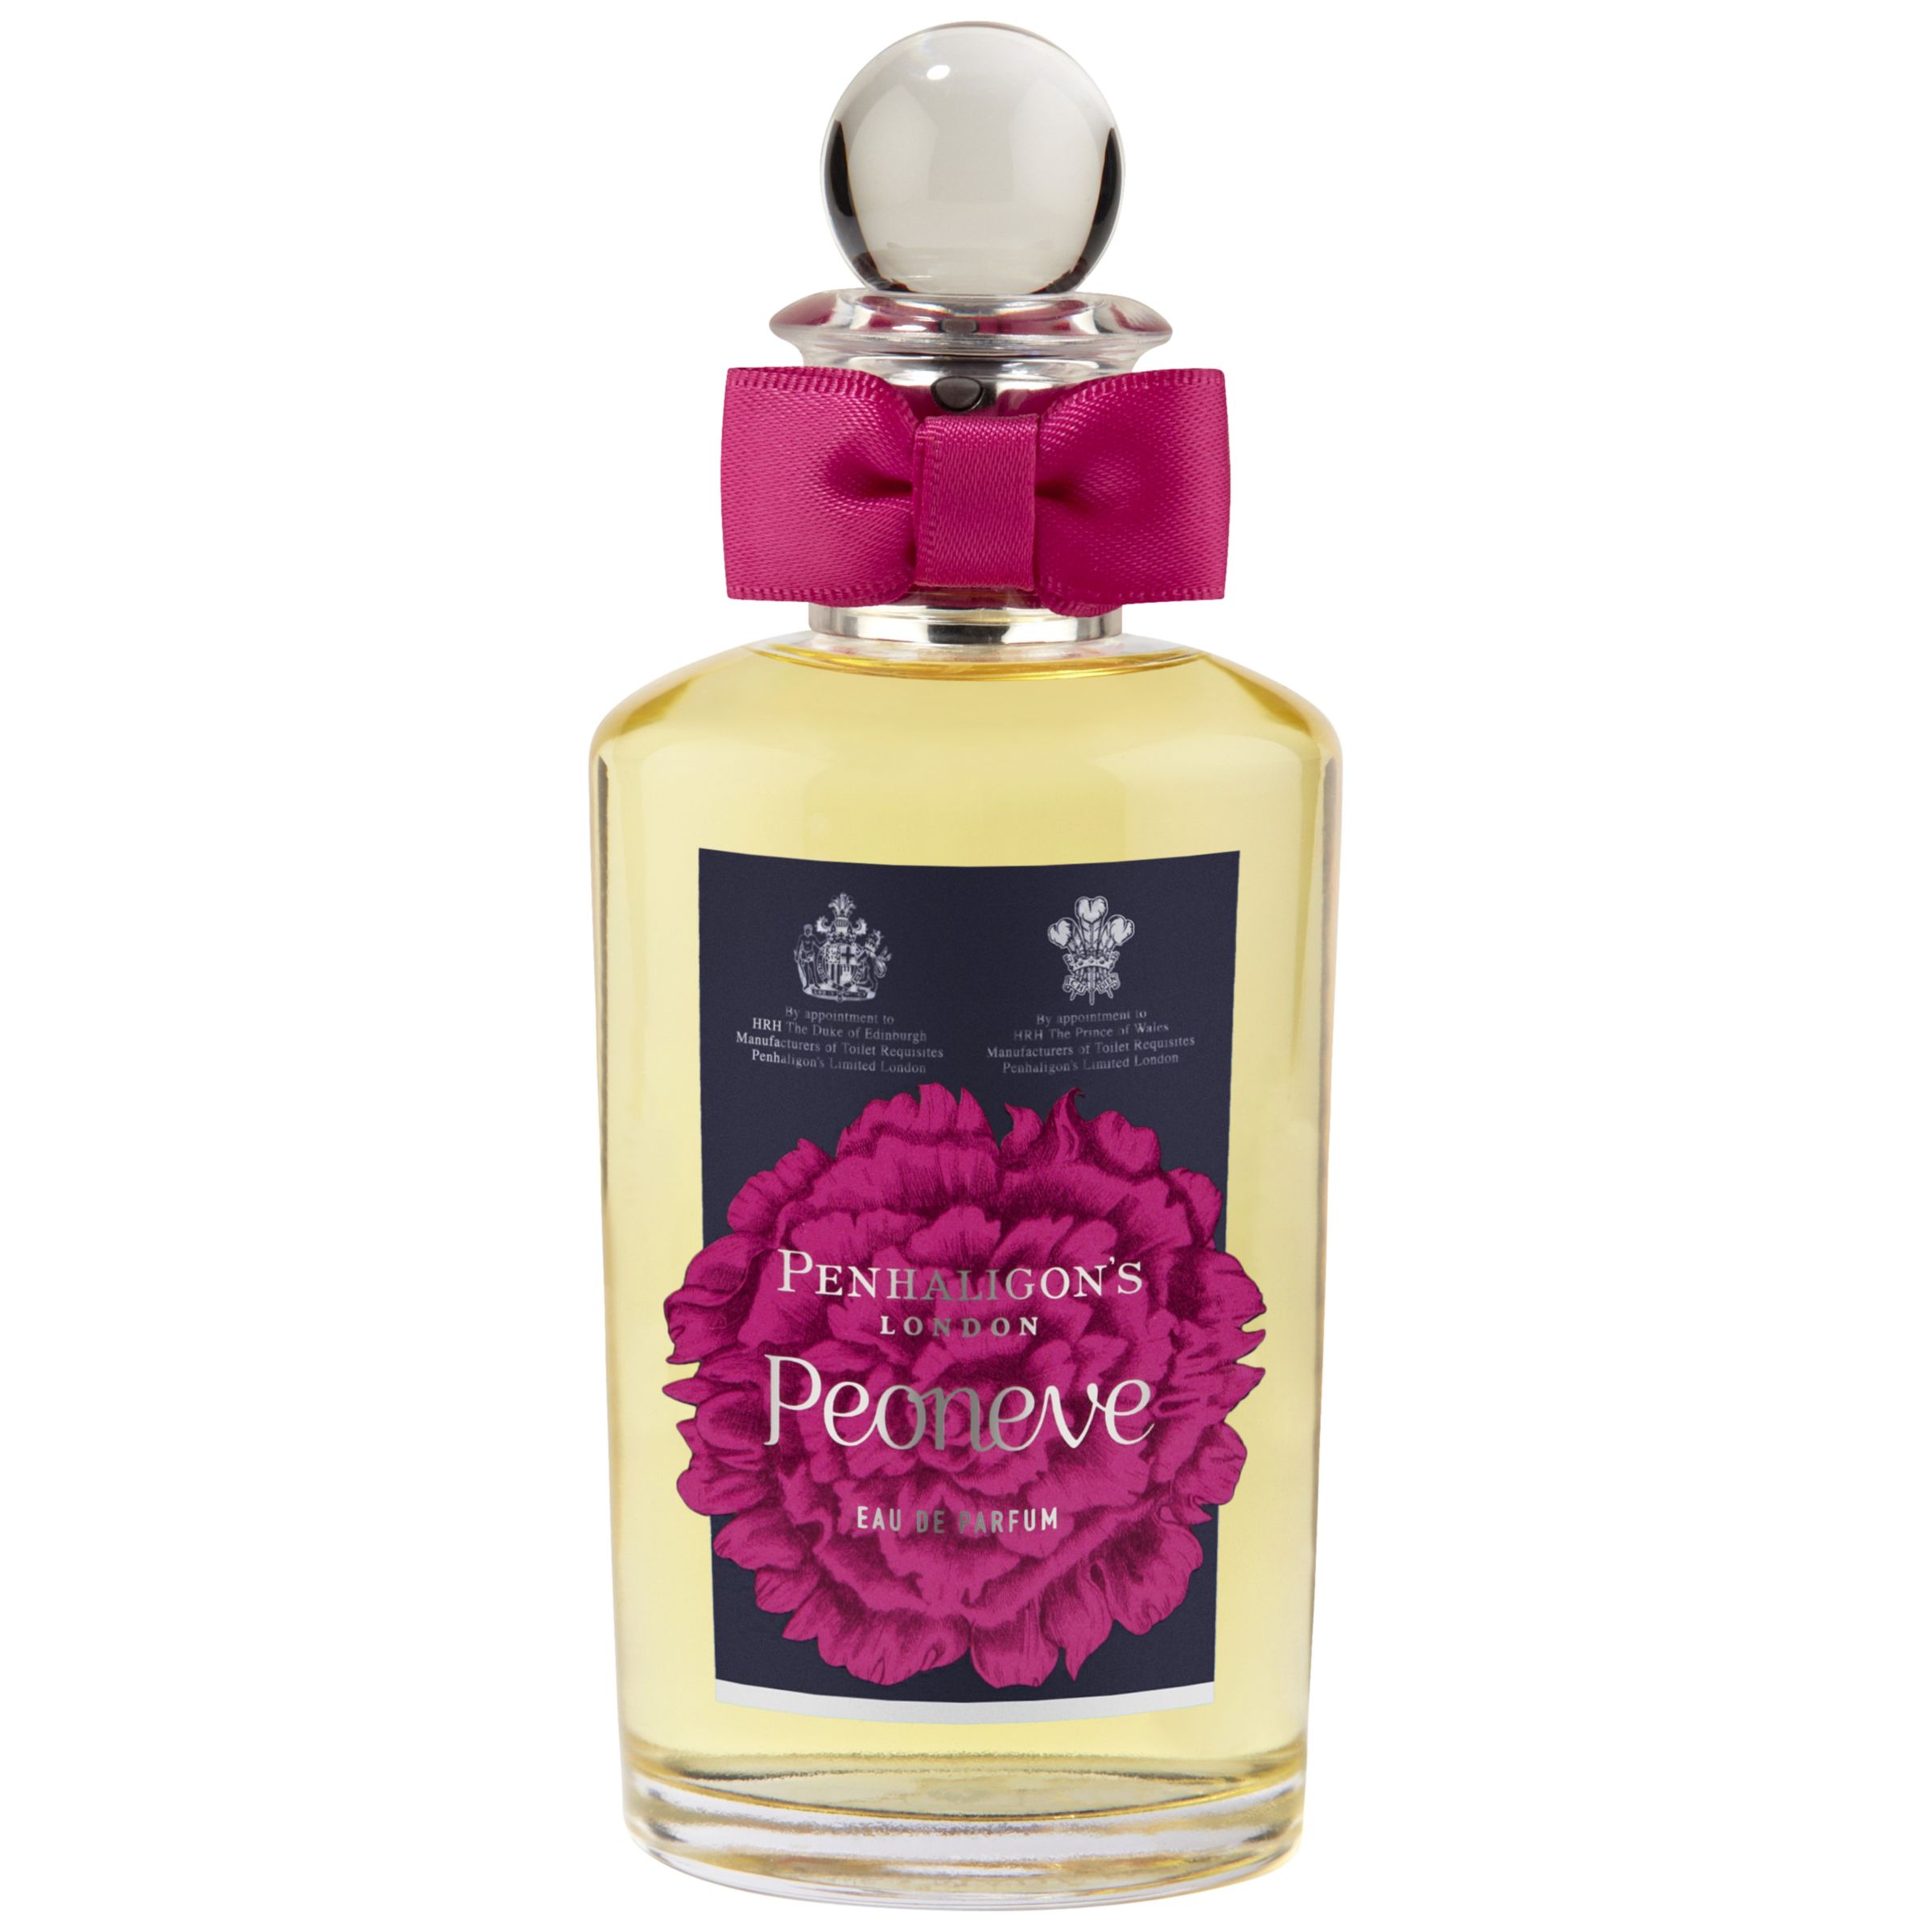 Penhaligon's Peoneve Eau de Parfum